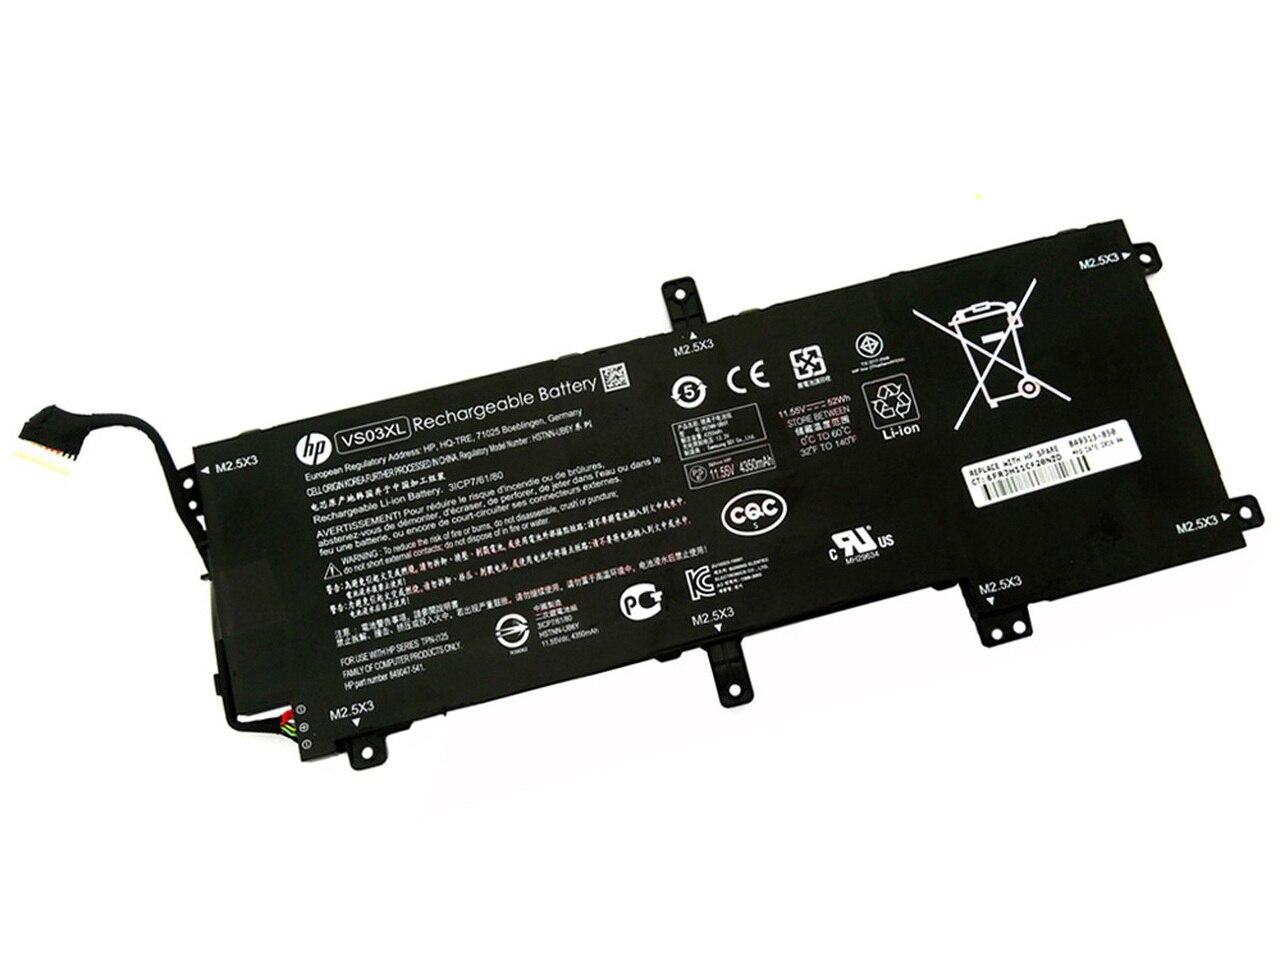 Оригинальный аккумулятор (батарея) для ноутбука HP Envy 15-AS024 (VS03XL) 11.55V 4350mAh